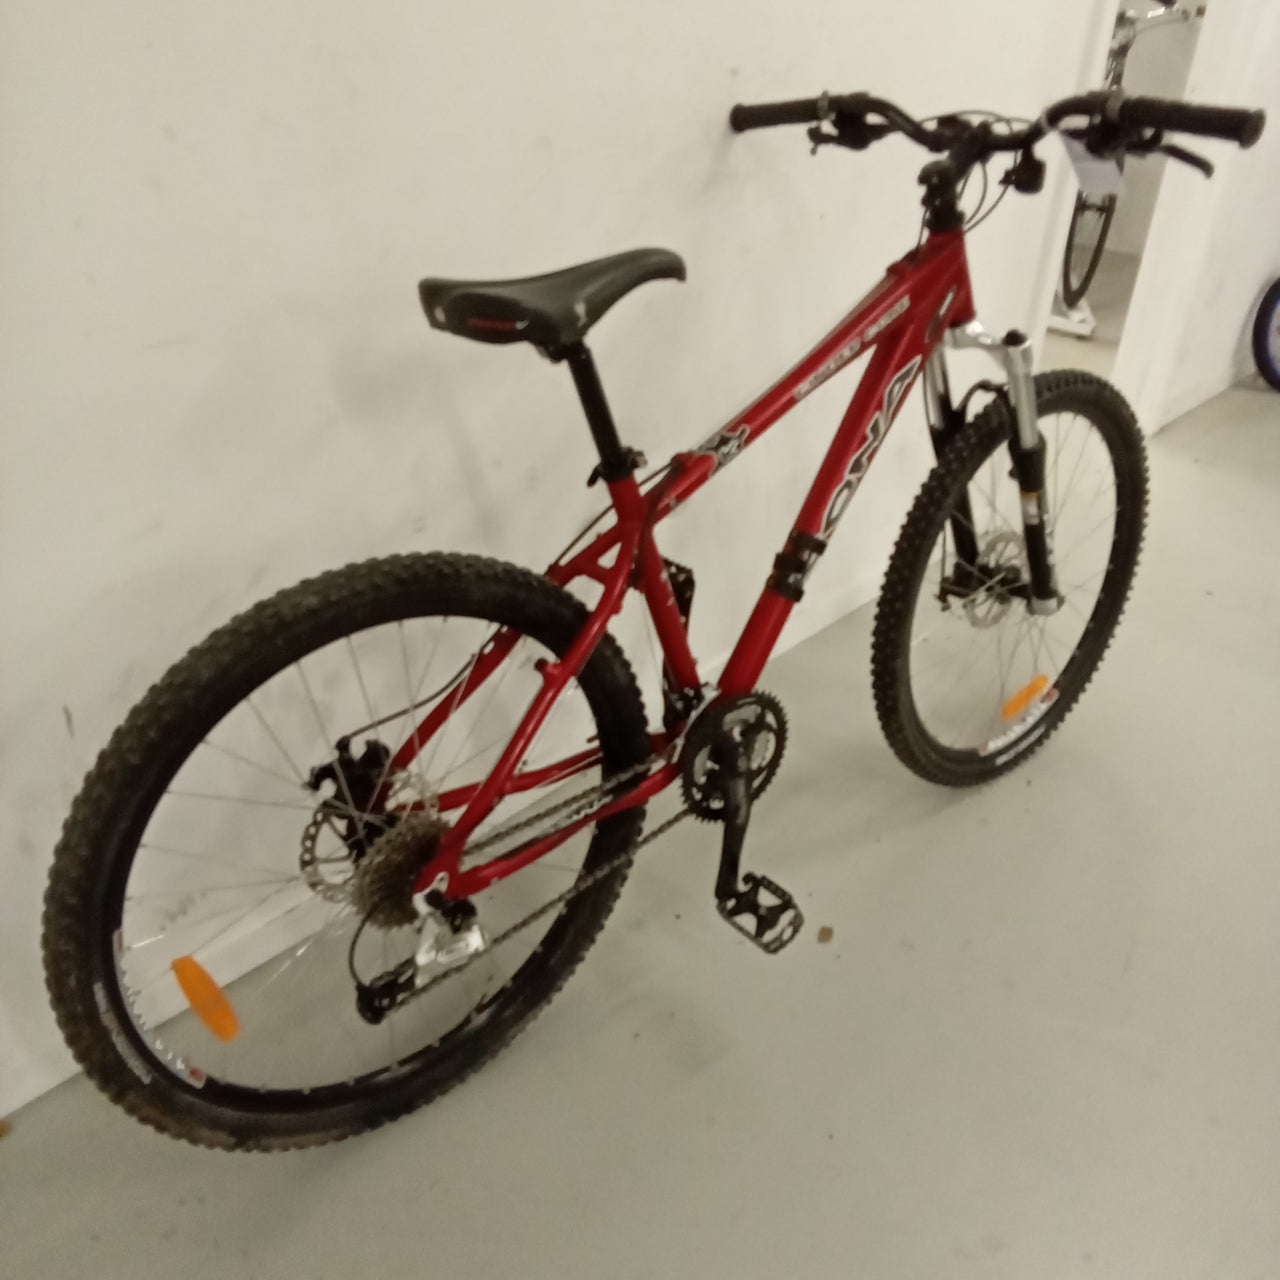 1704 - 48cm Red, Mountain Bike, Bike